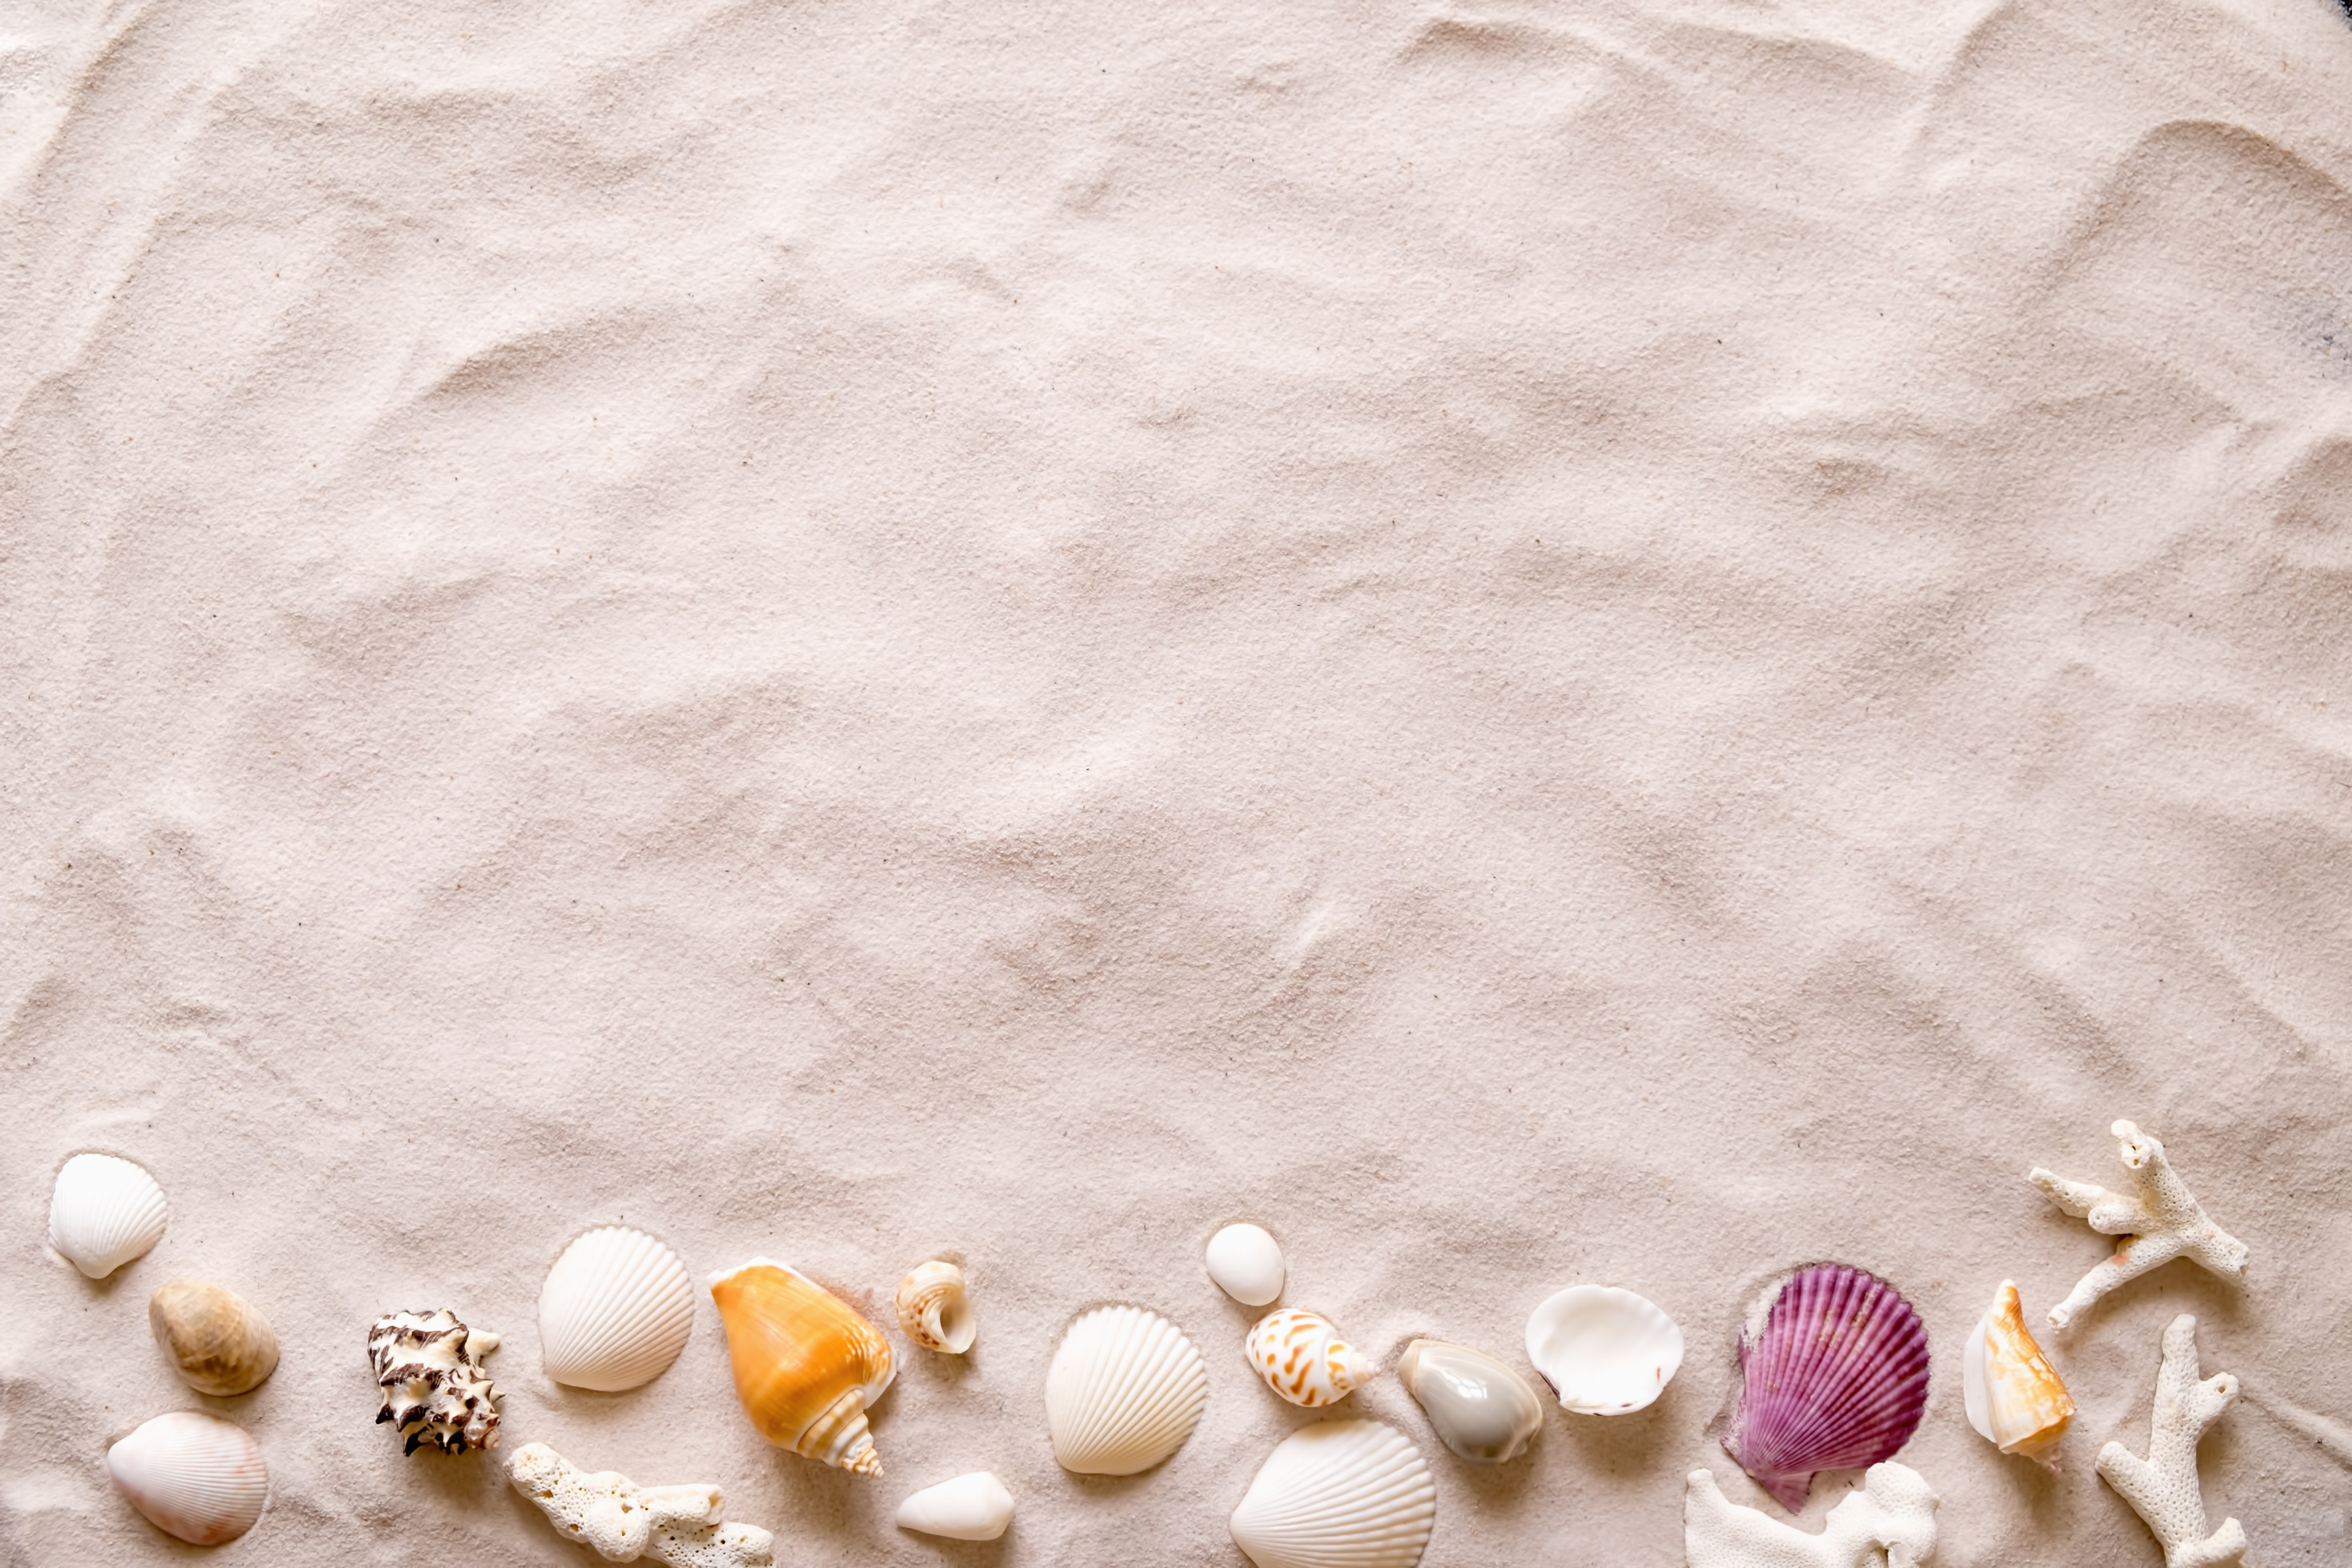 Beach Sand with Seashells